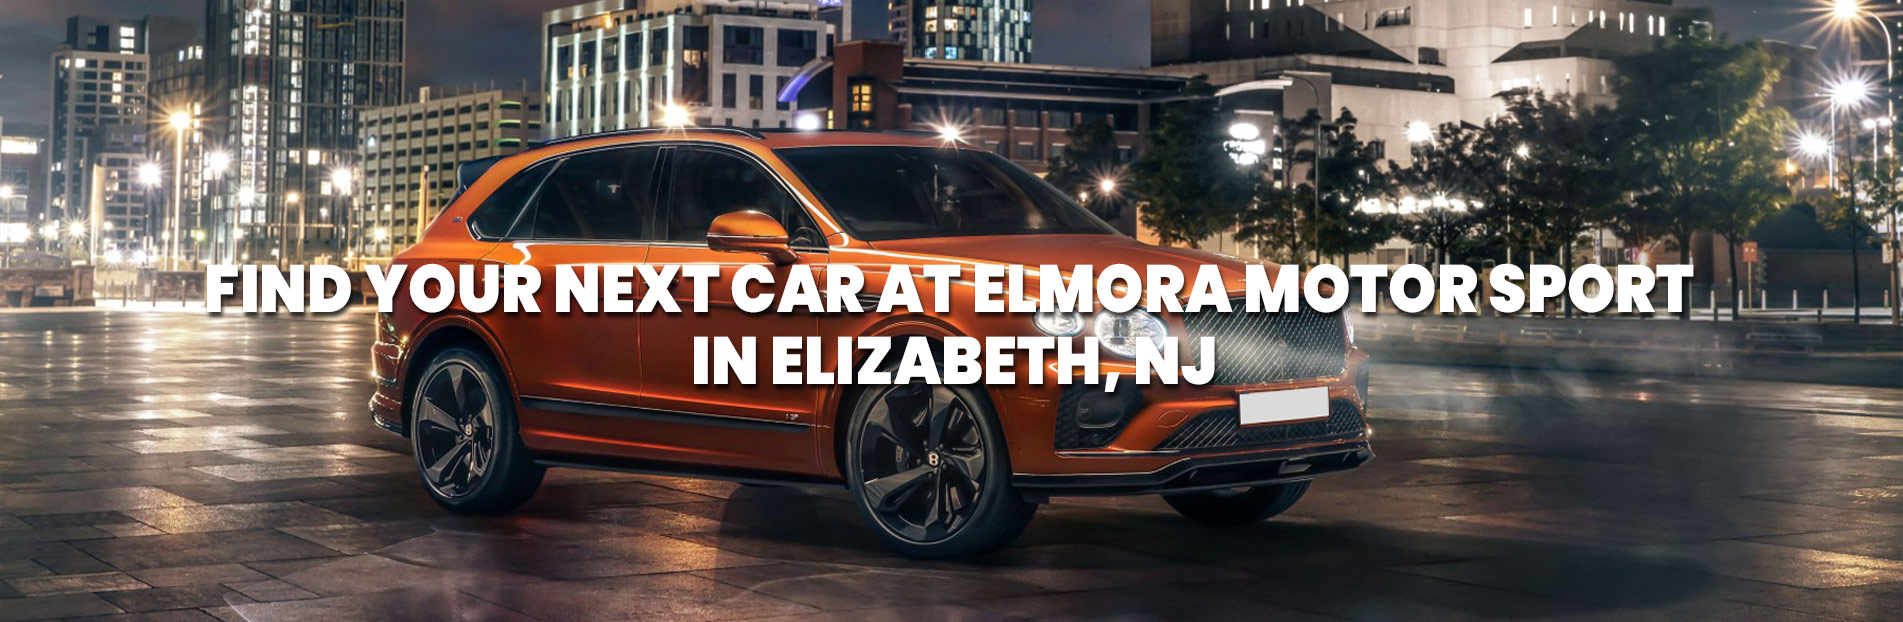 Used cars for sale in Elizabeth | Elmora Motor Sports. Elizabeth New Jersey